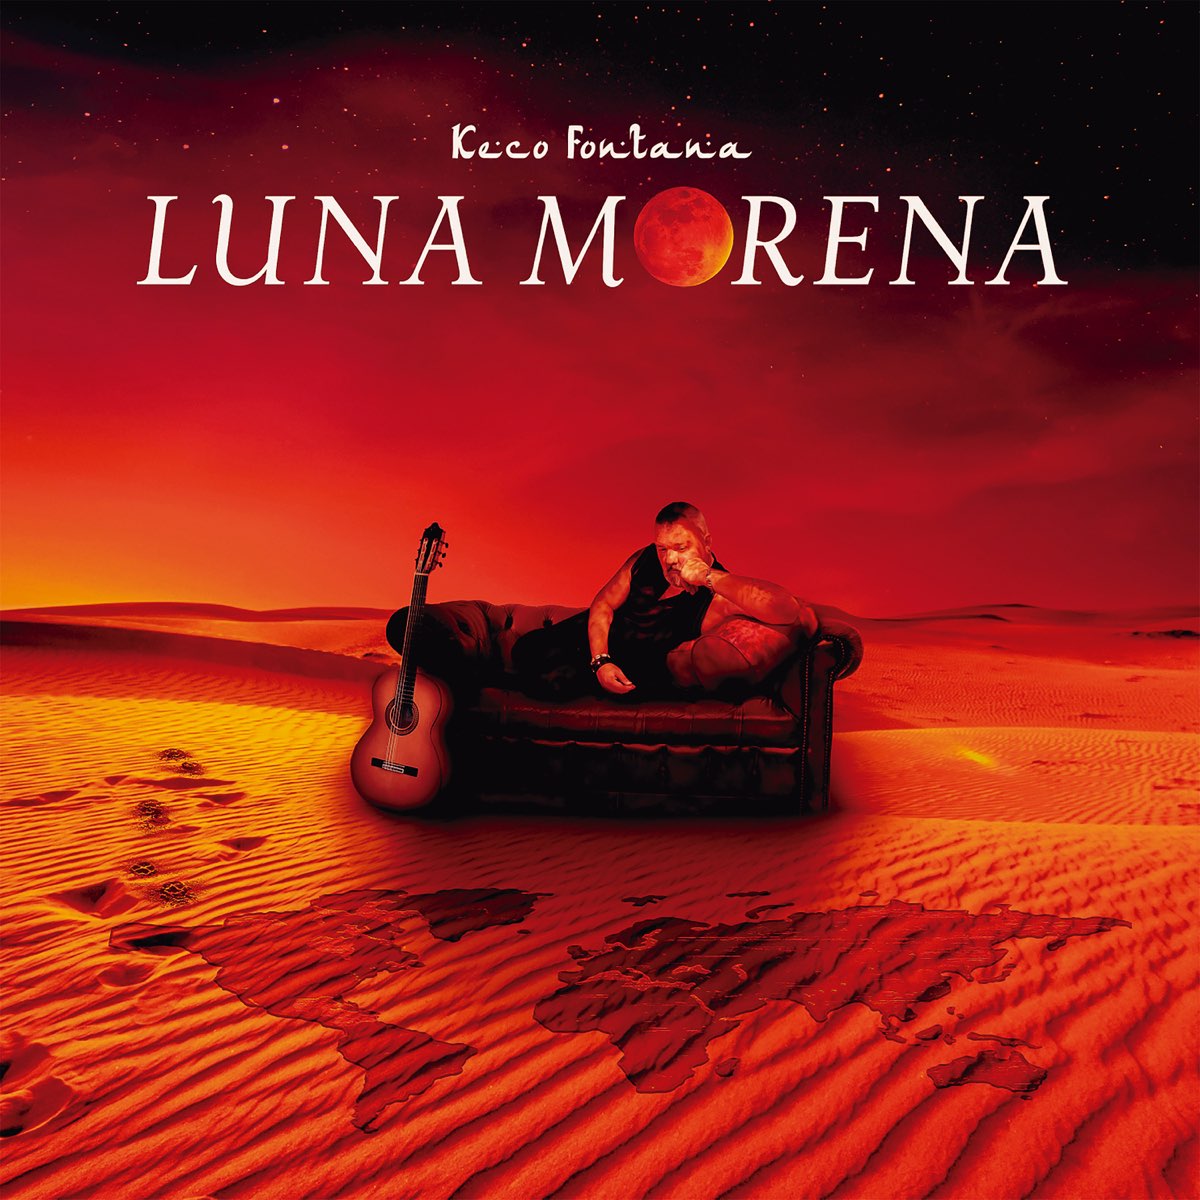 Luna Morena by Keco Fontana on Apple Music